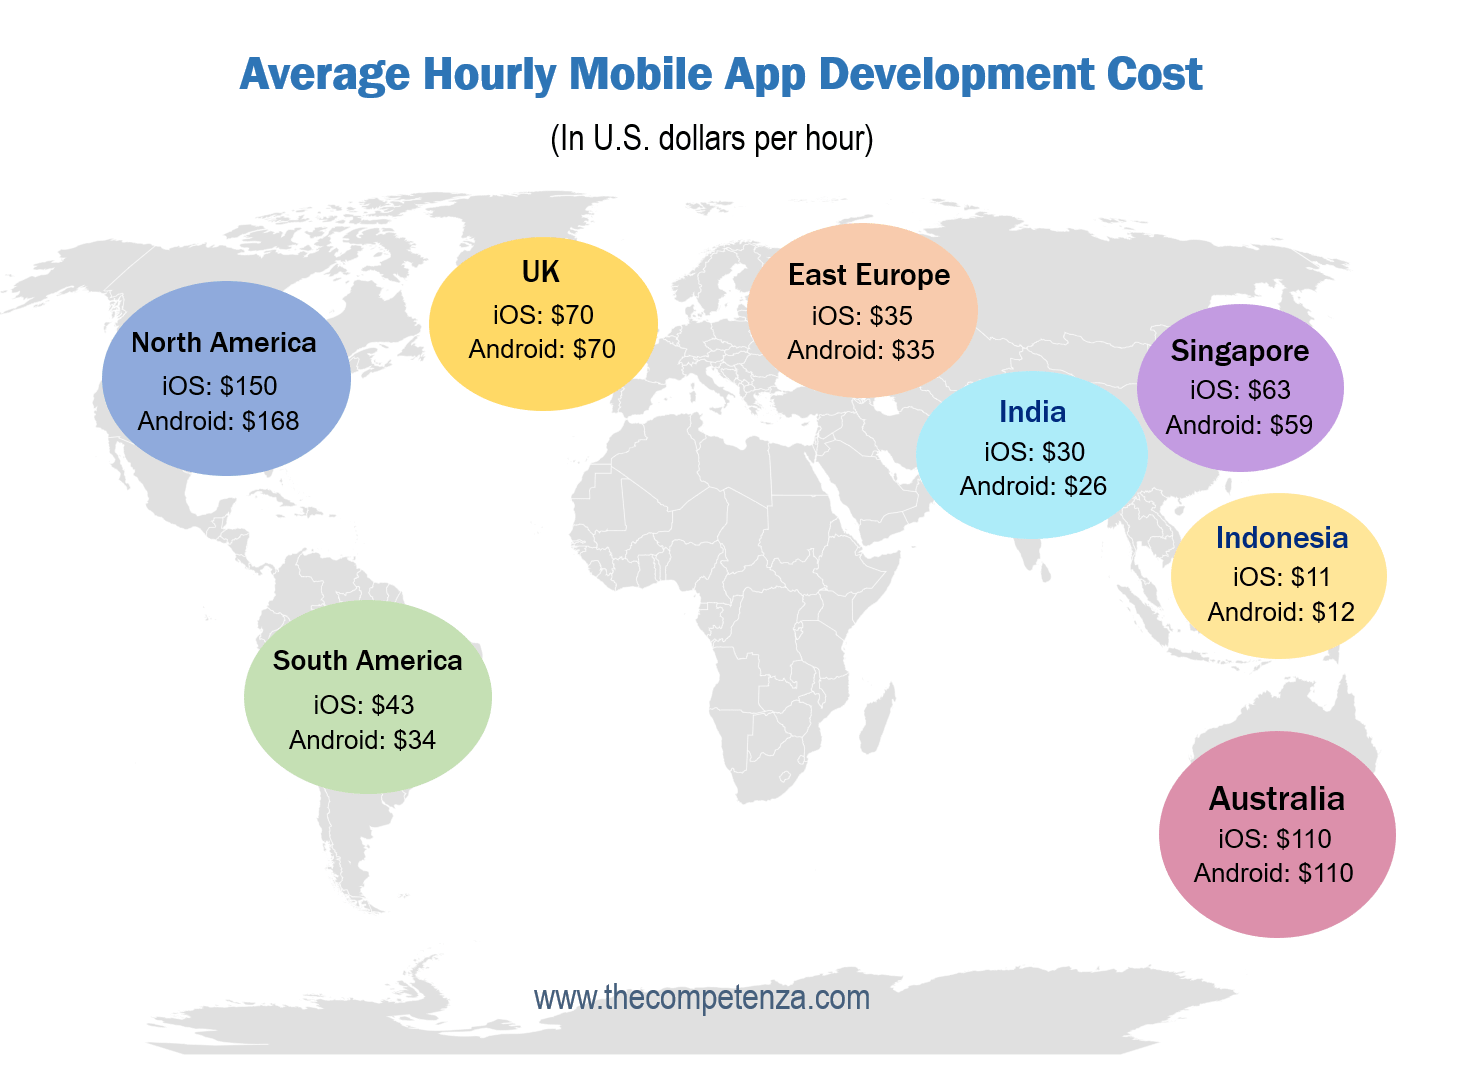 avg mobile app dev cost by region